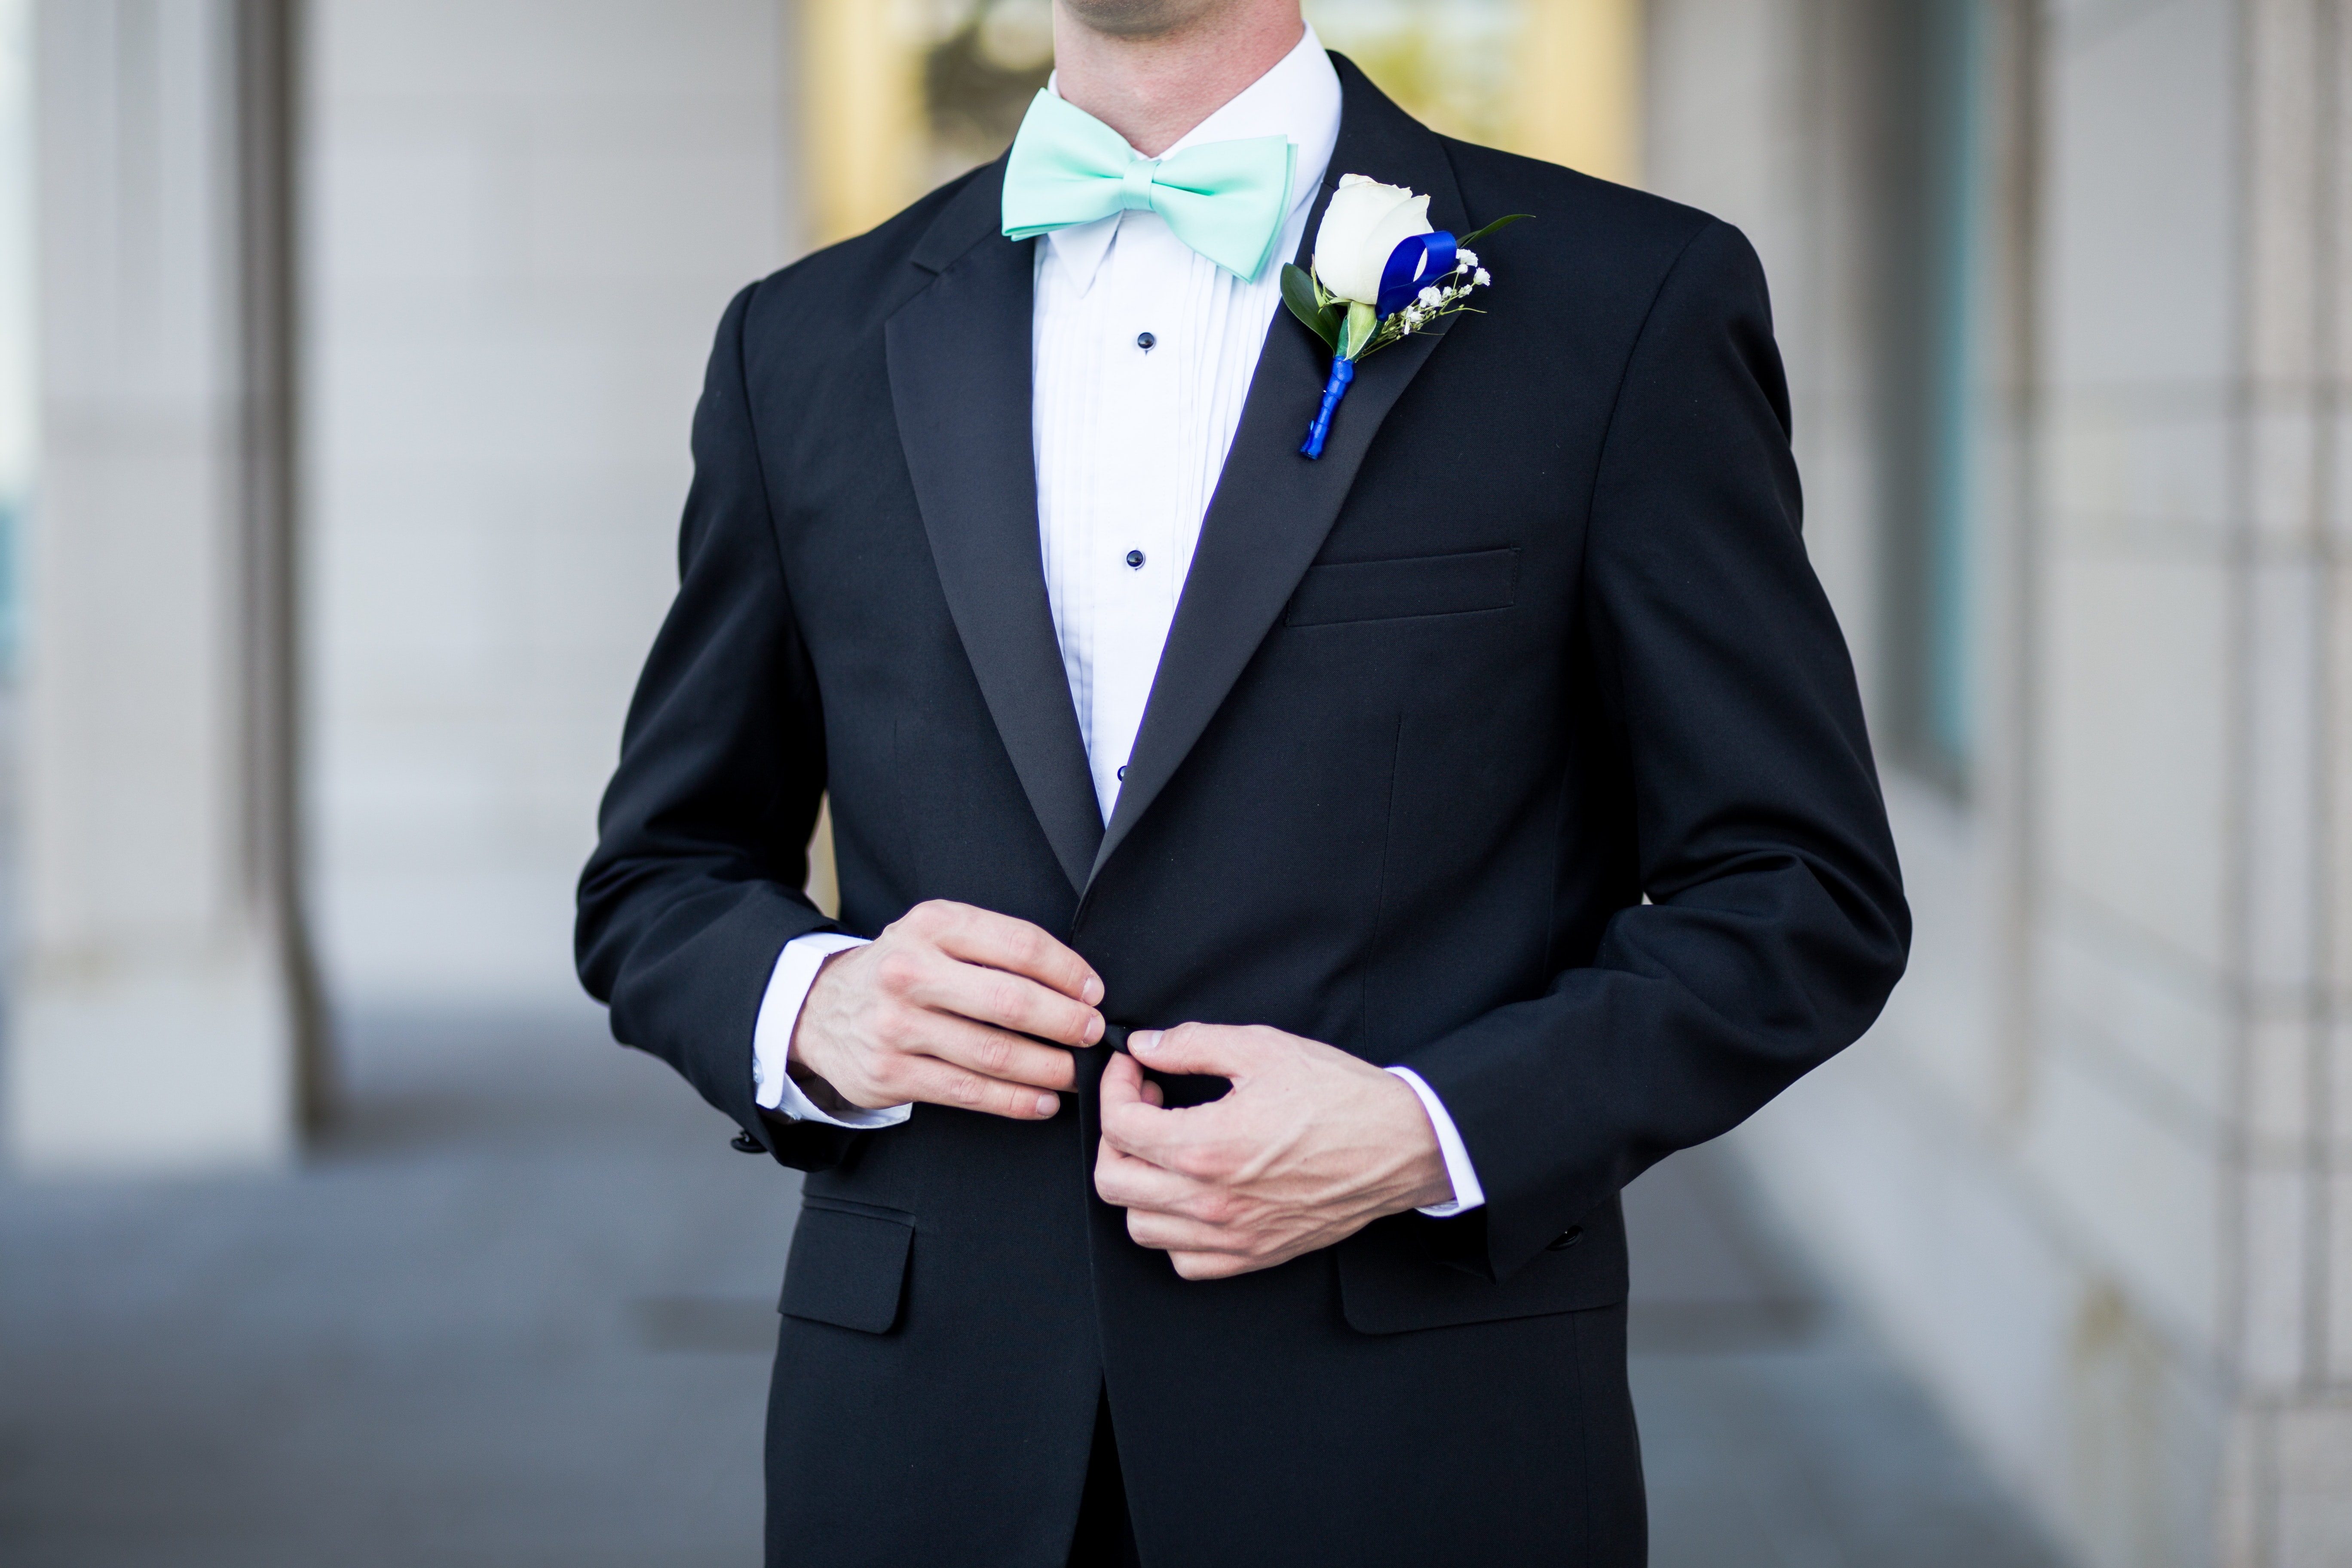 Man wearing black and teal tuxedo | Source: Pexels